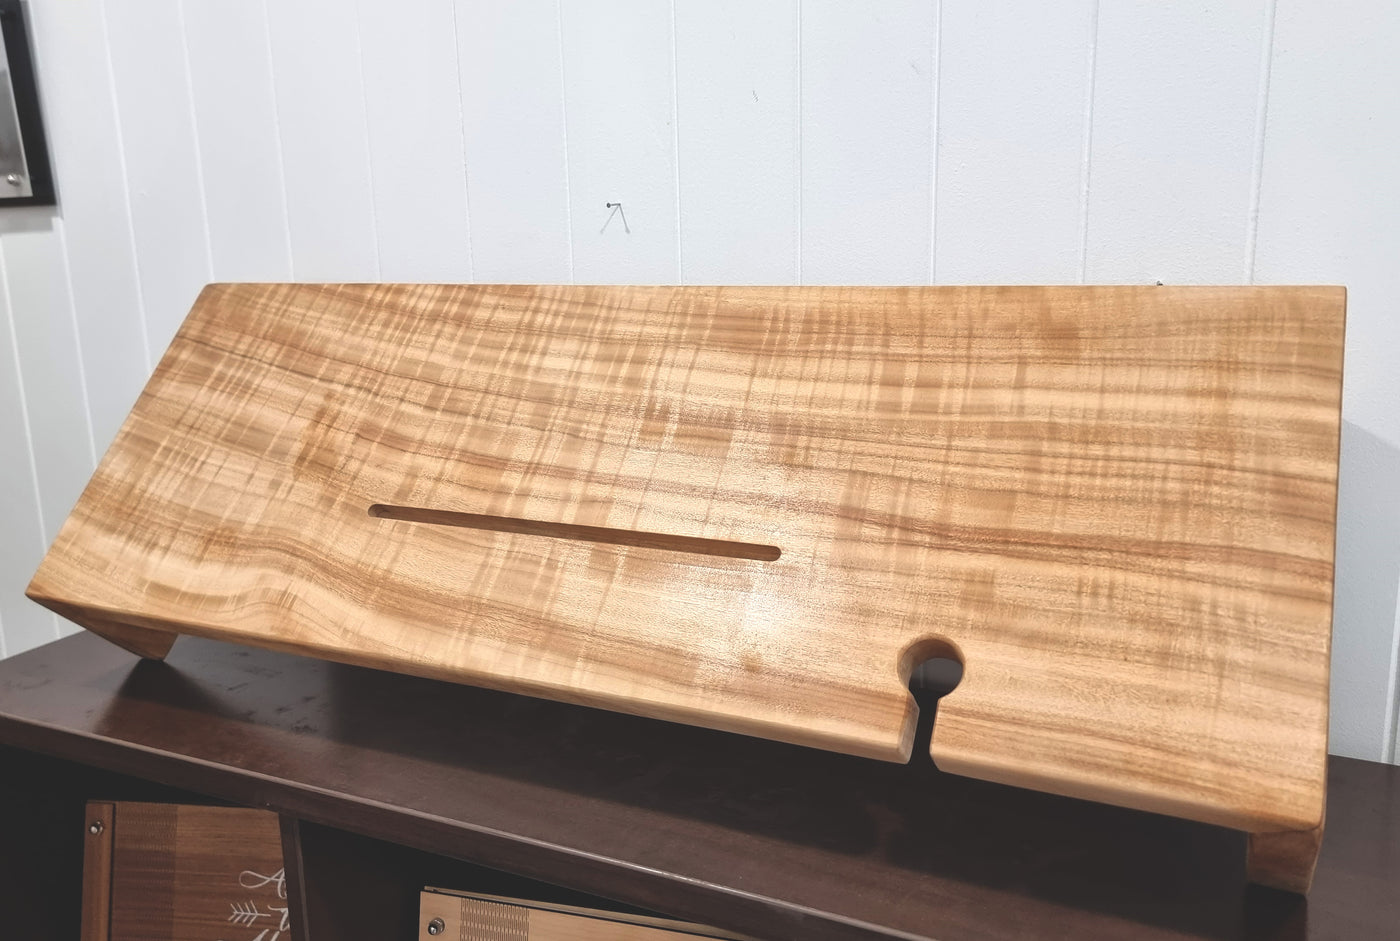 Bath Caddy - Stunning Timber Grain